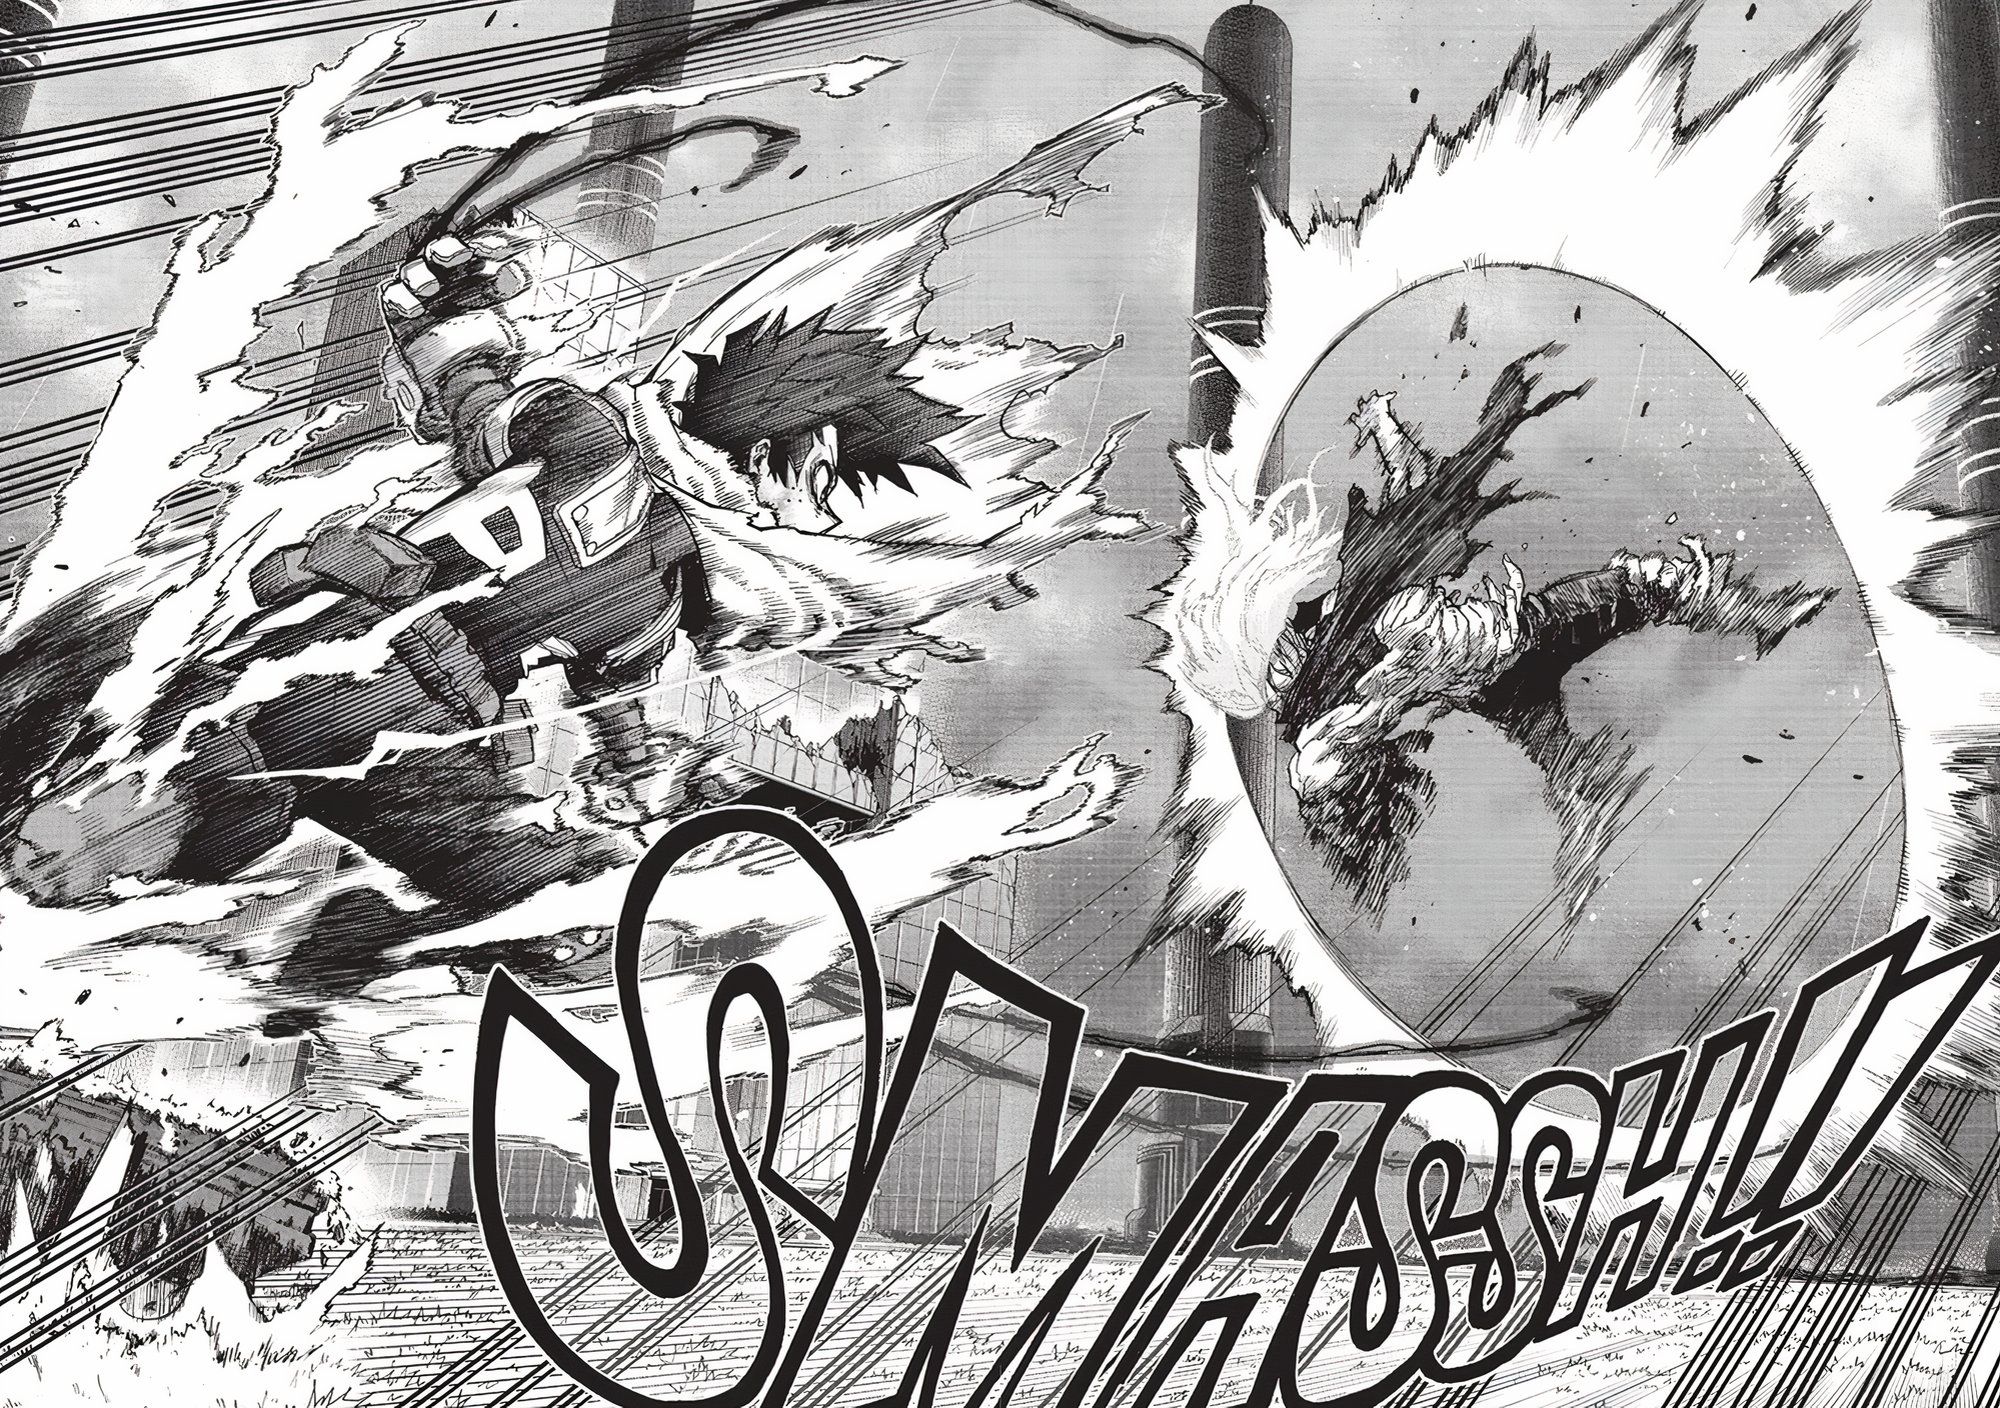 Manga panel from My Hero Academia 366 shows Deku landing a fast kick against Shigaraki whose covered in finger-like armor.